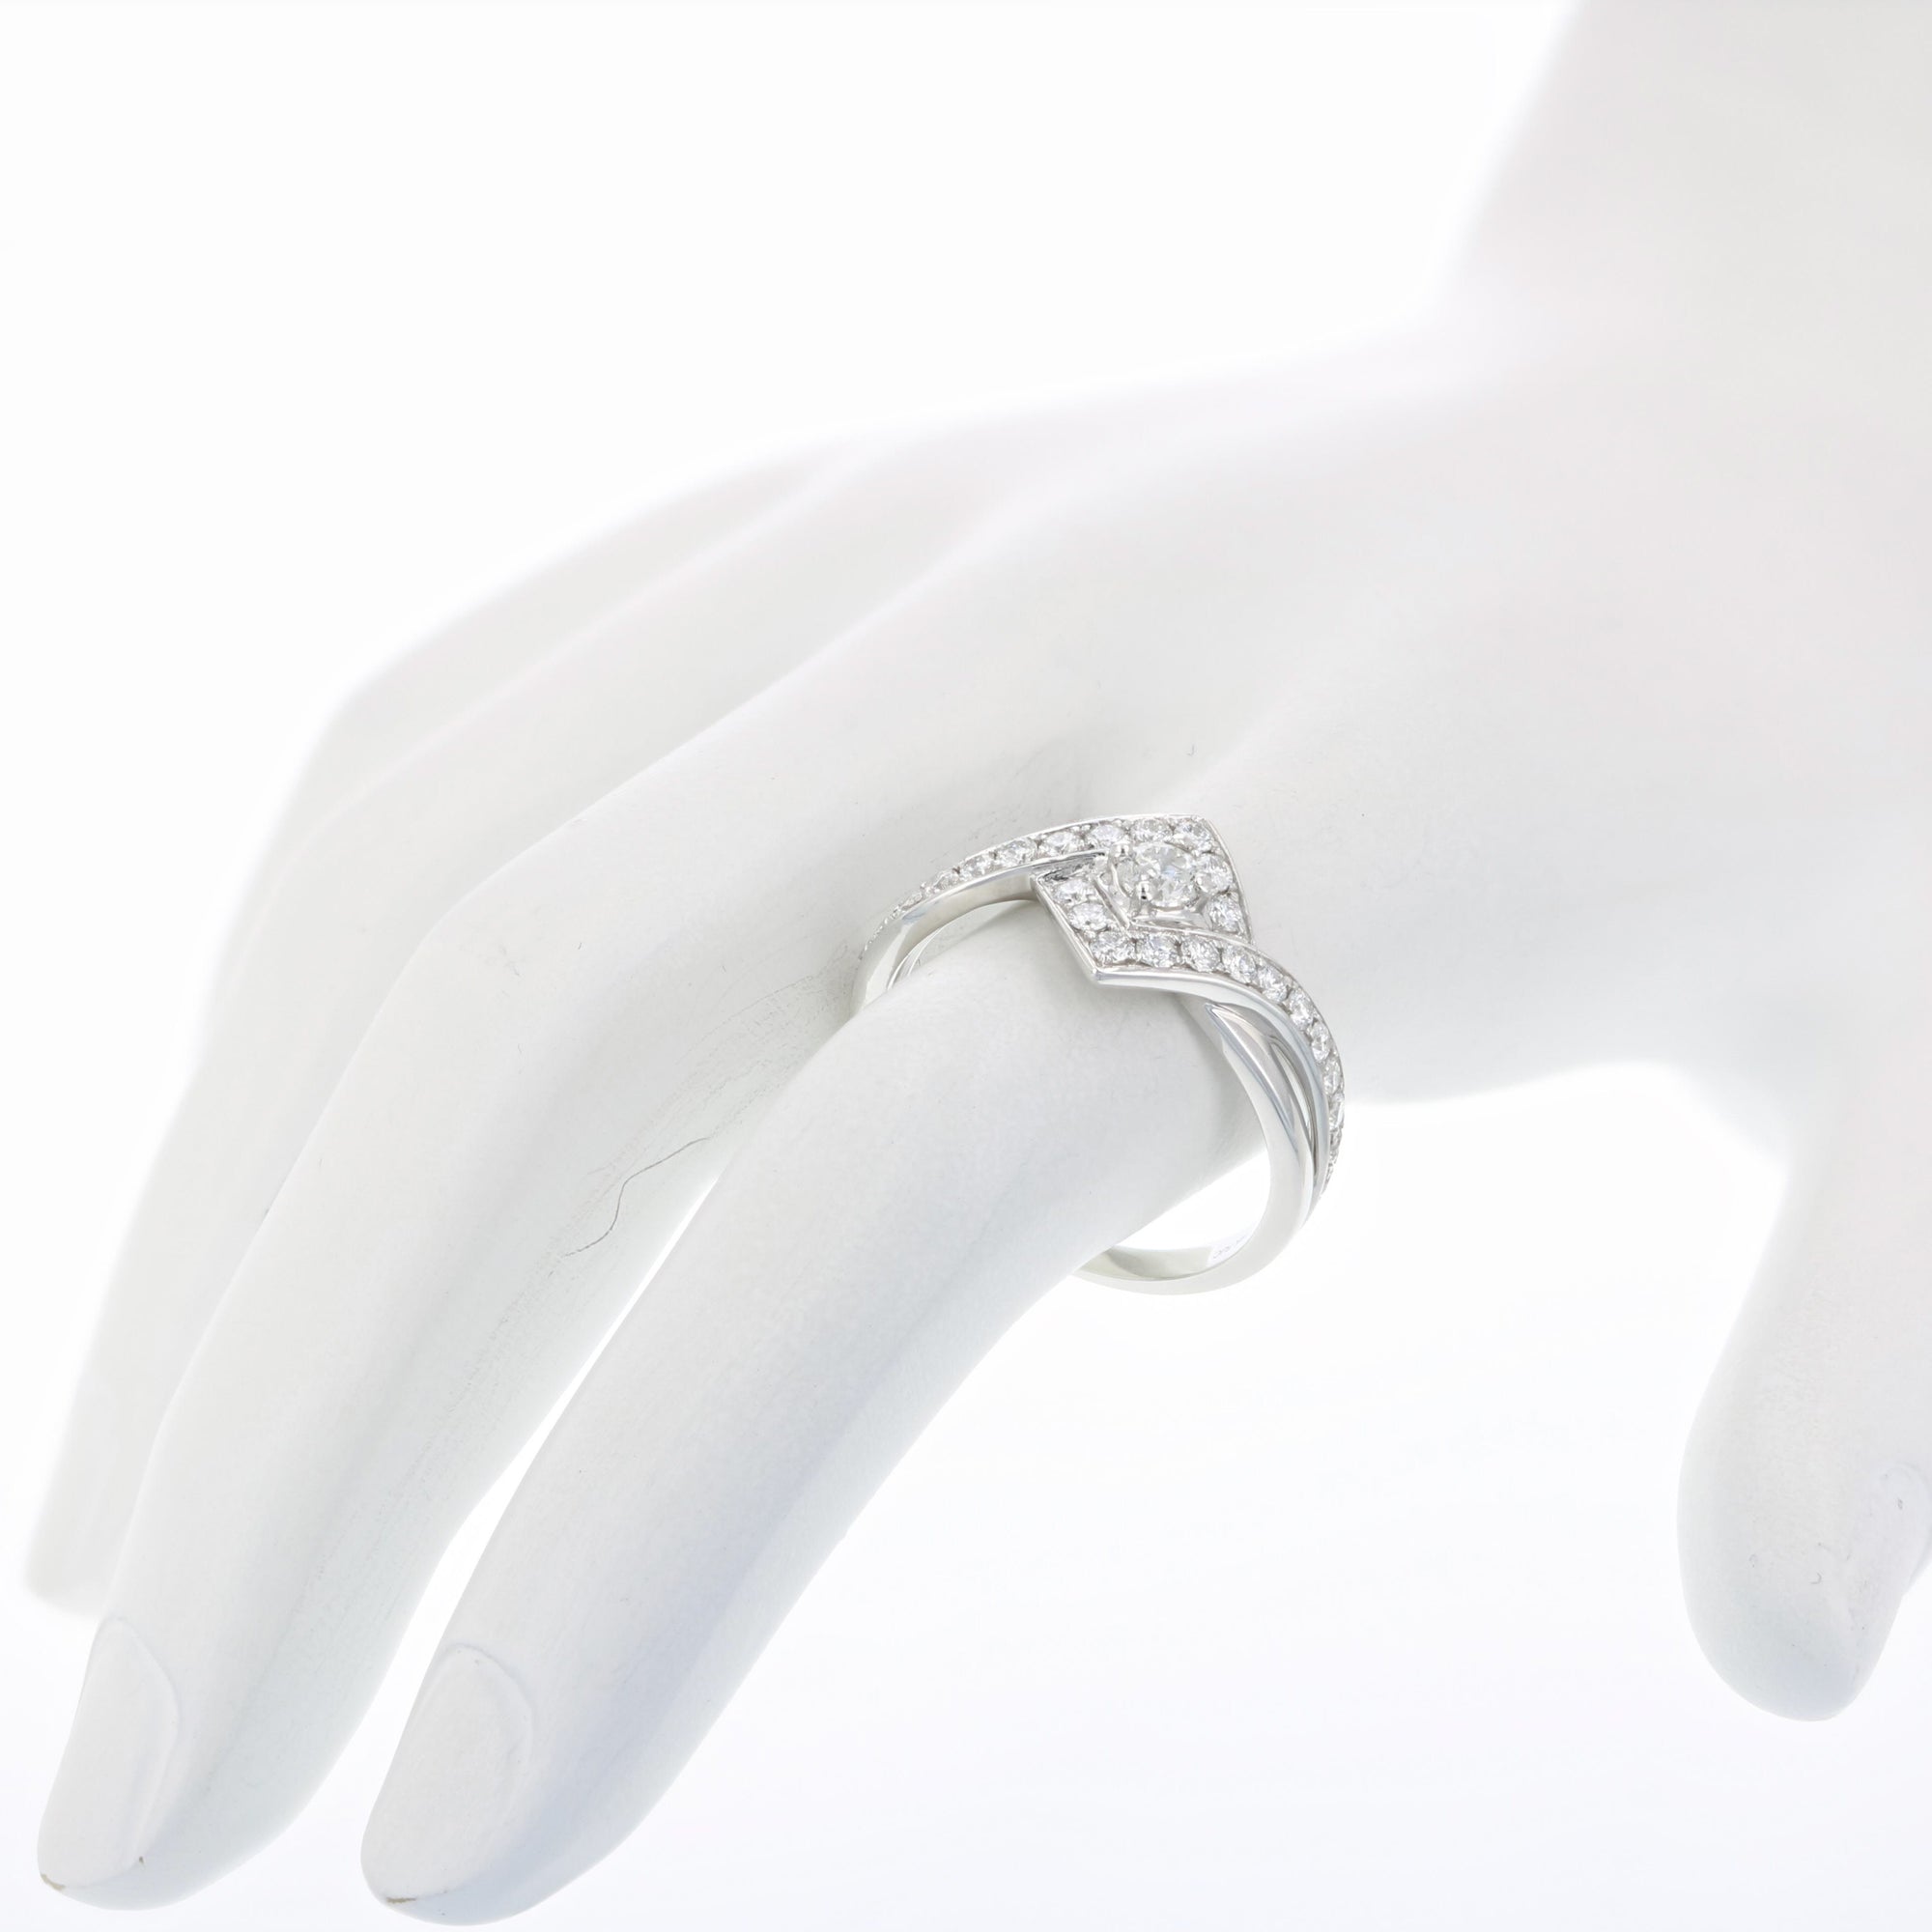 2/3 cttw Diamond Engagement Ring 14K White Gold Princess Square Design Bridal